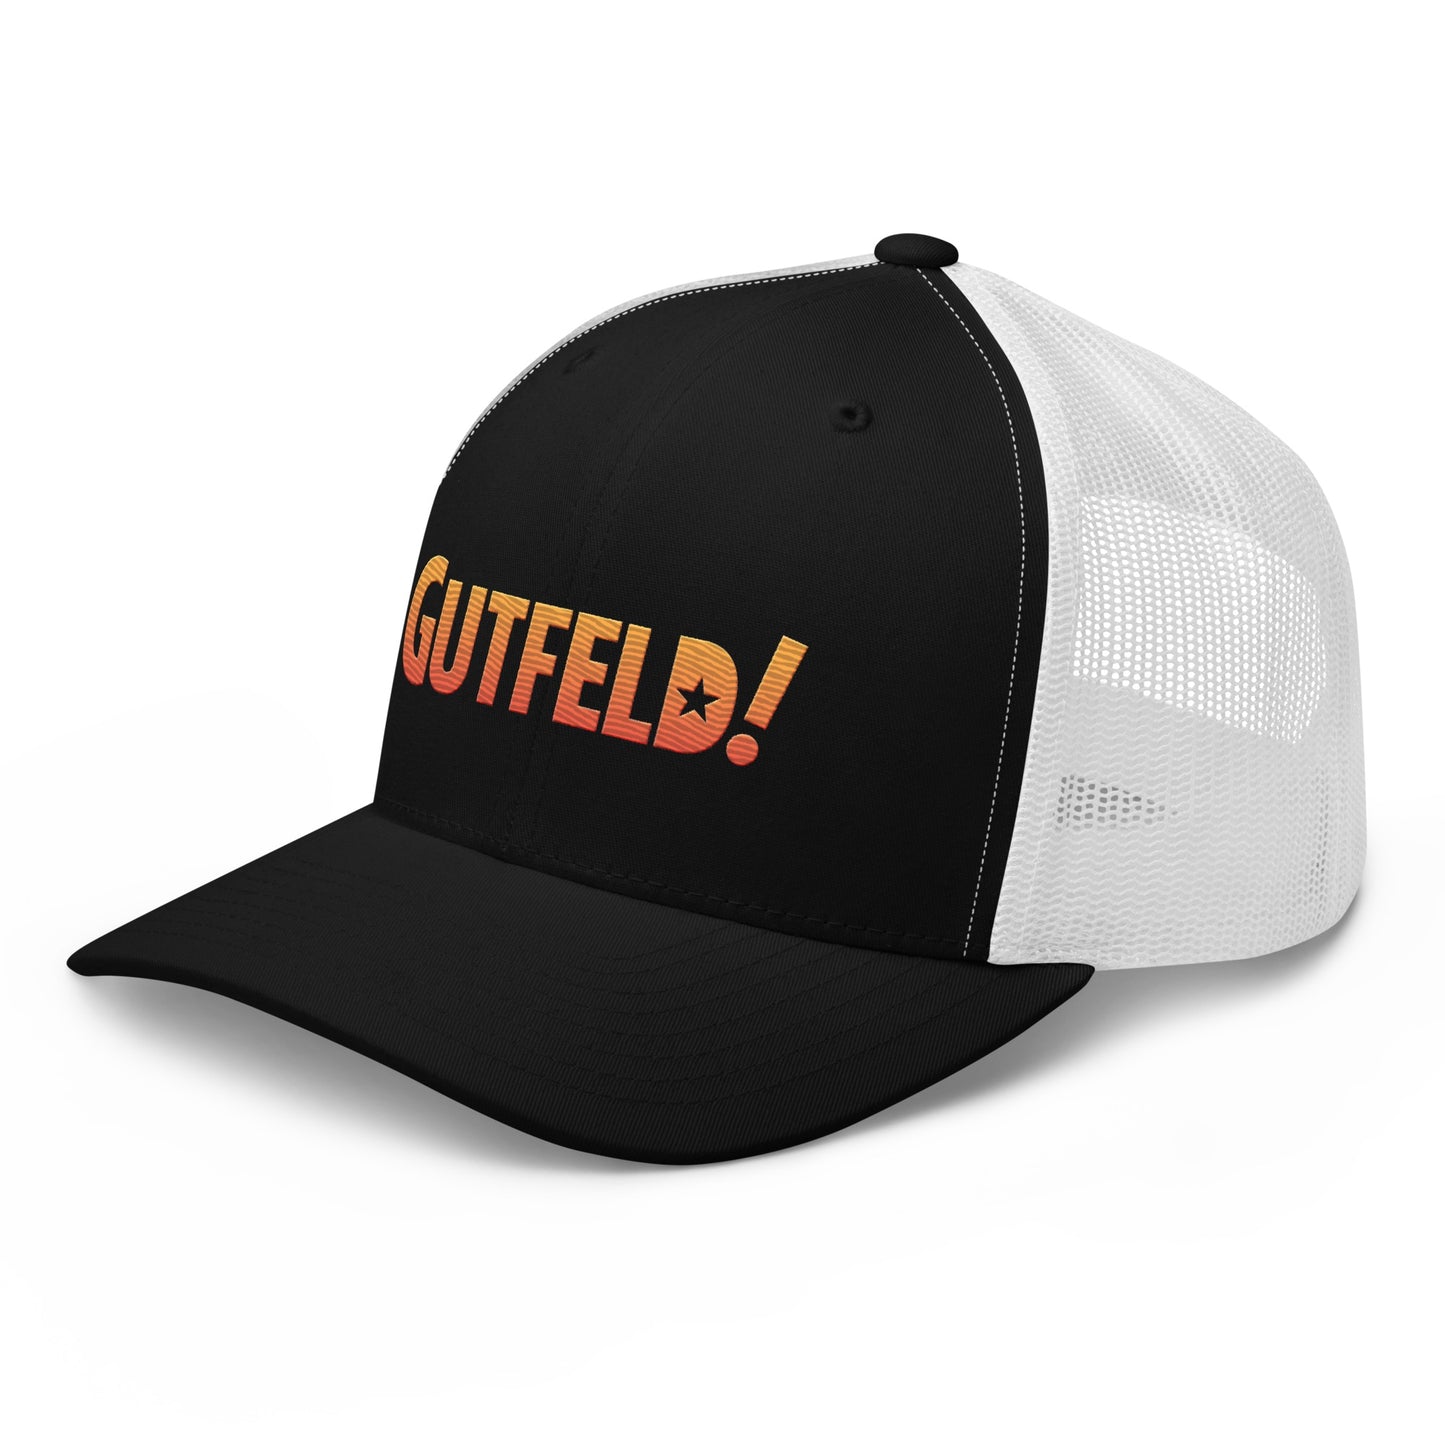 Gutfeld! Logo Embroidered Retro Trucker Hat